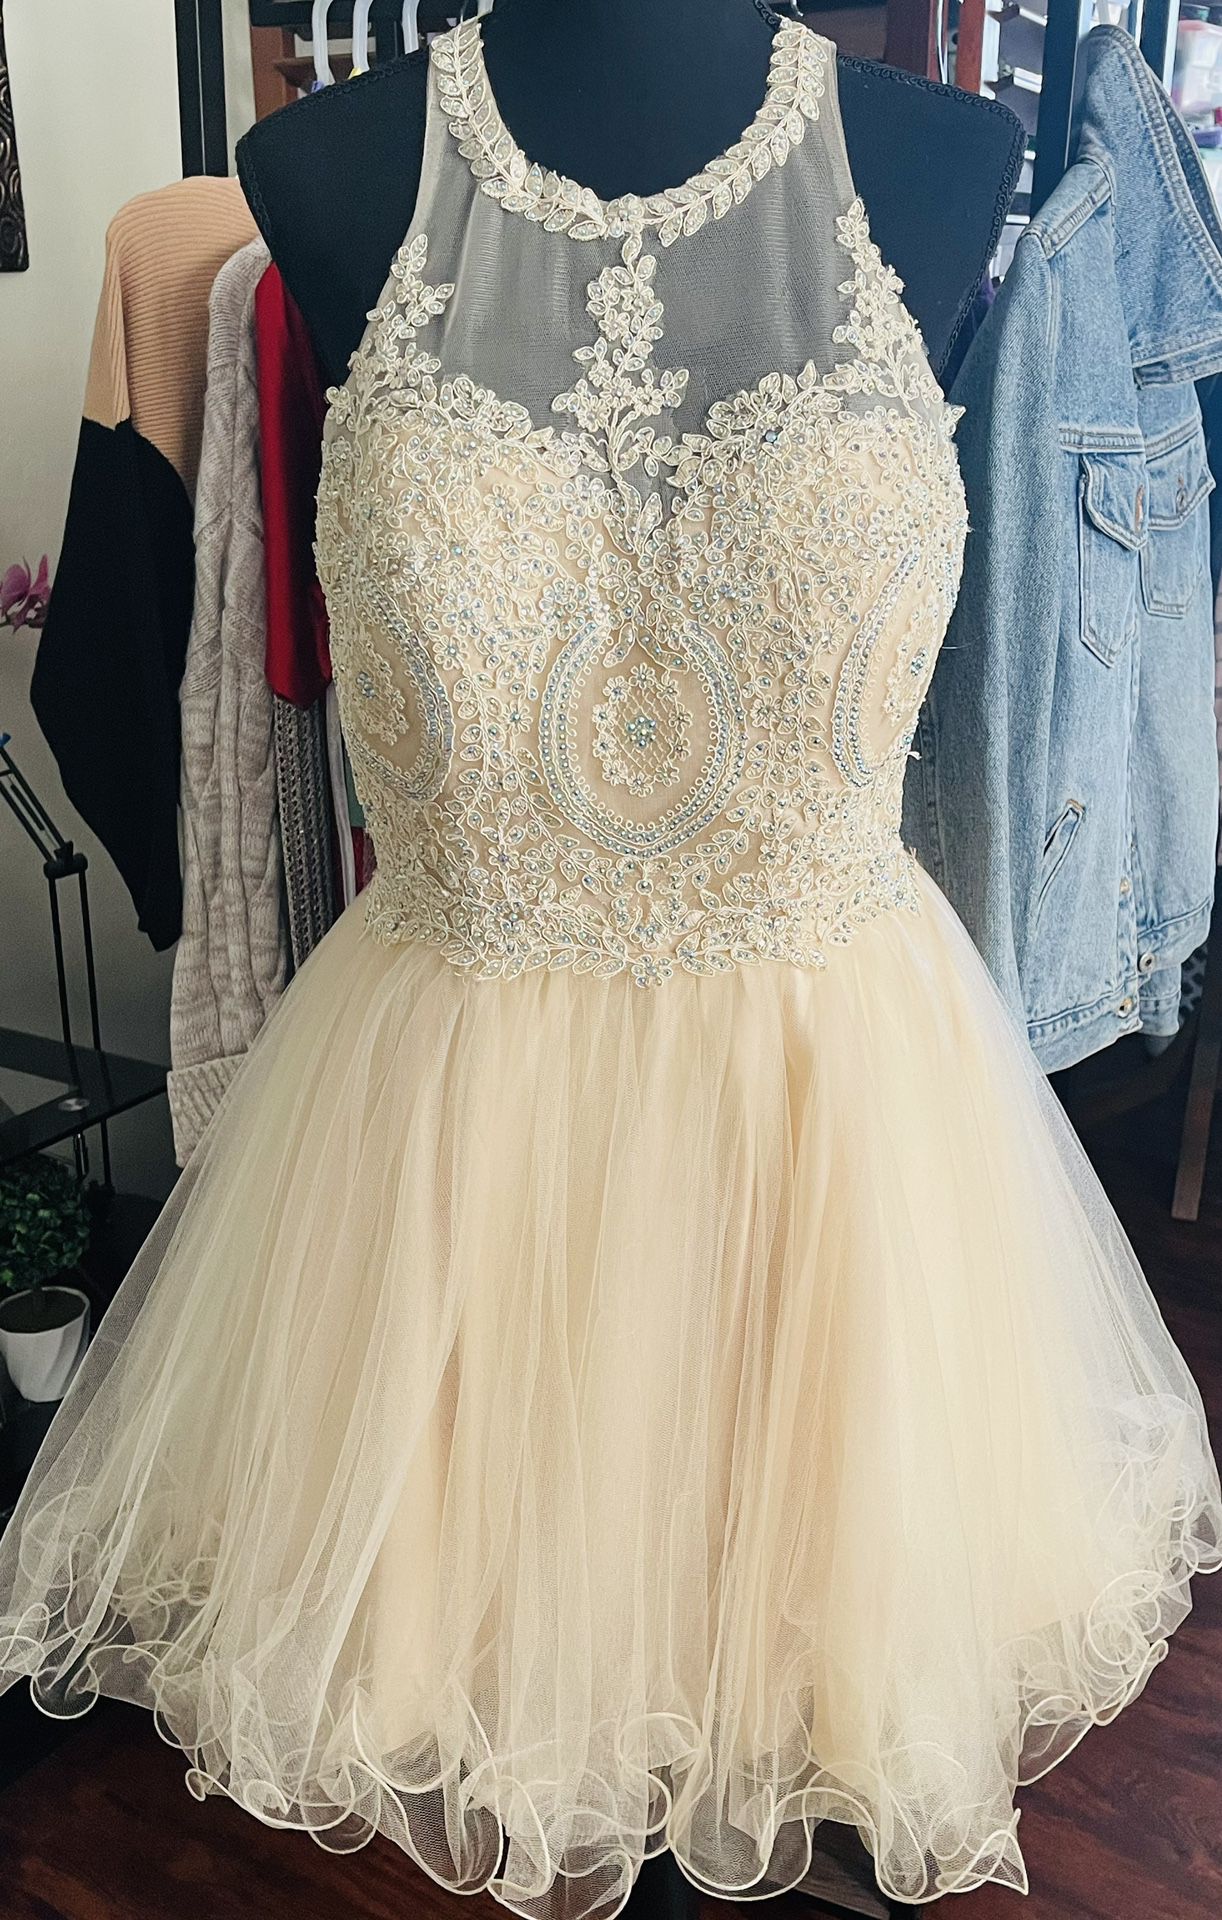 Size XL prom dress